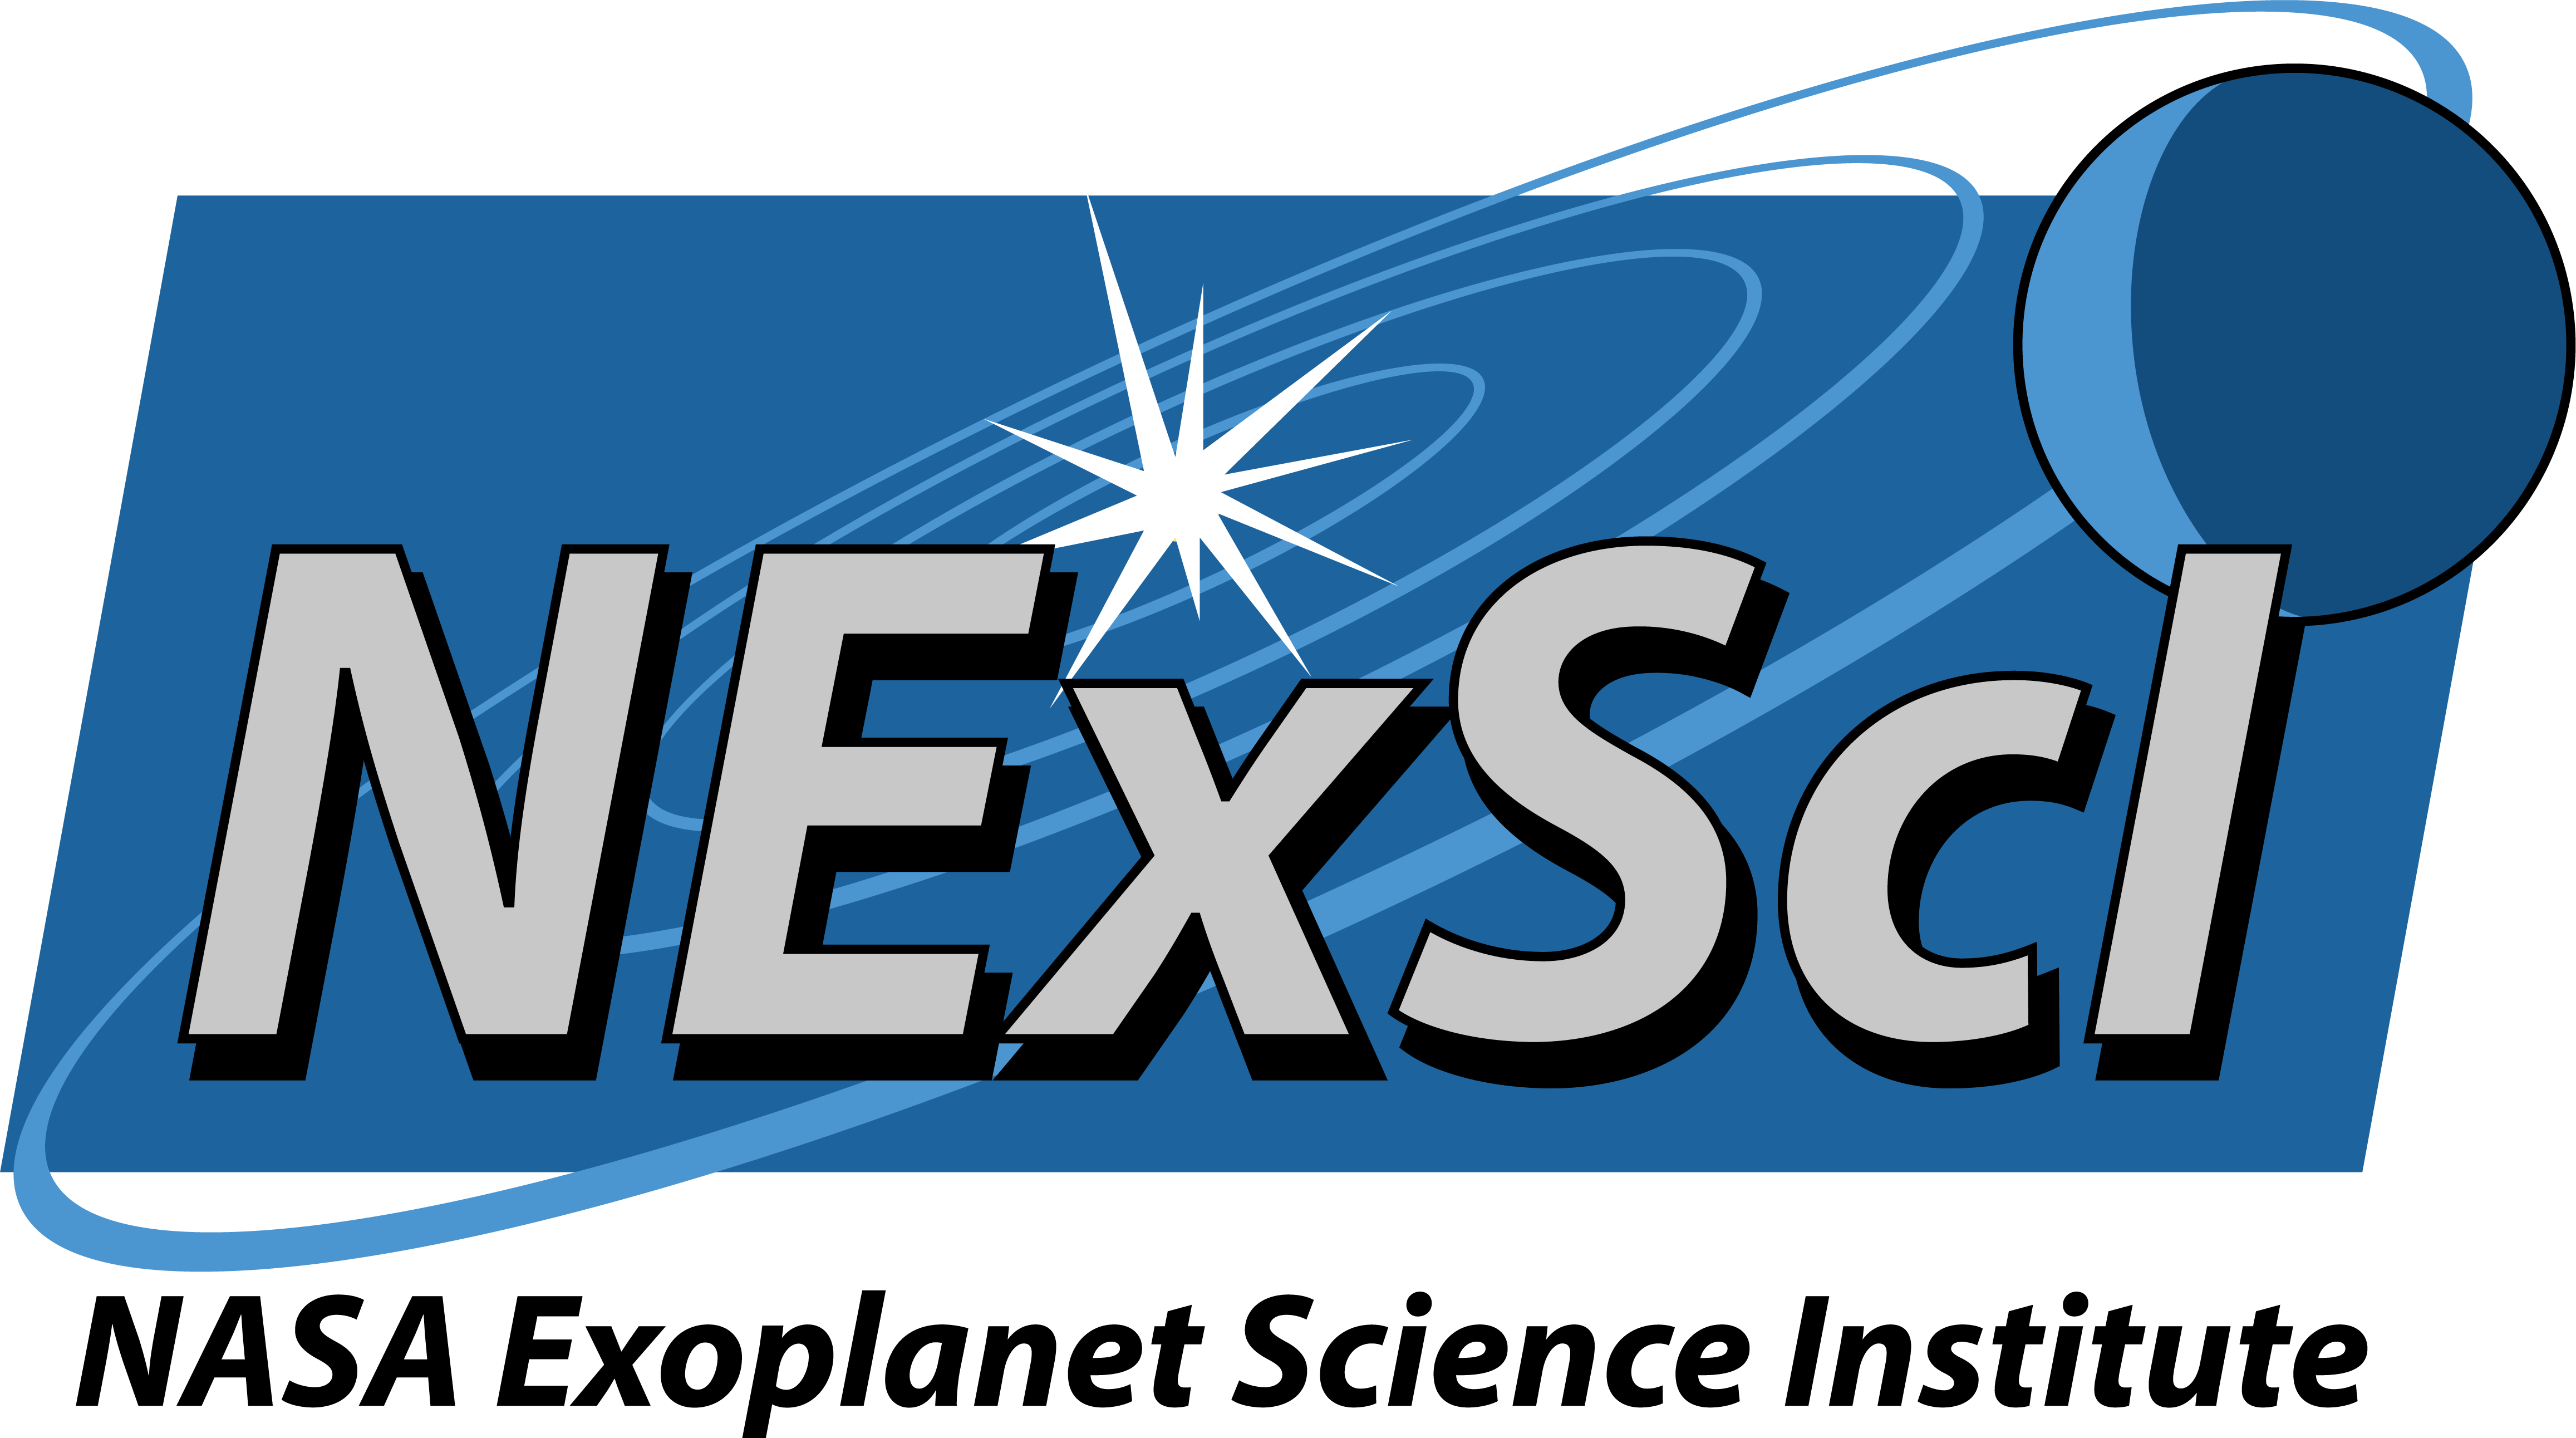 NASA Exoplanet Science Institute - NExScI